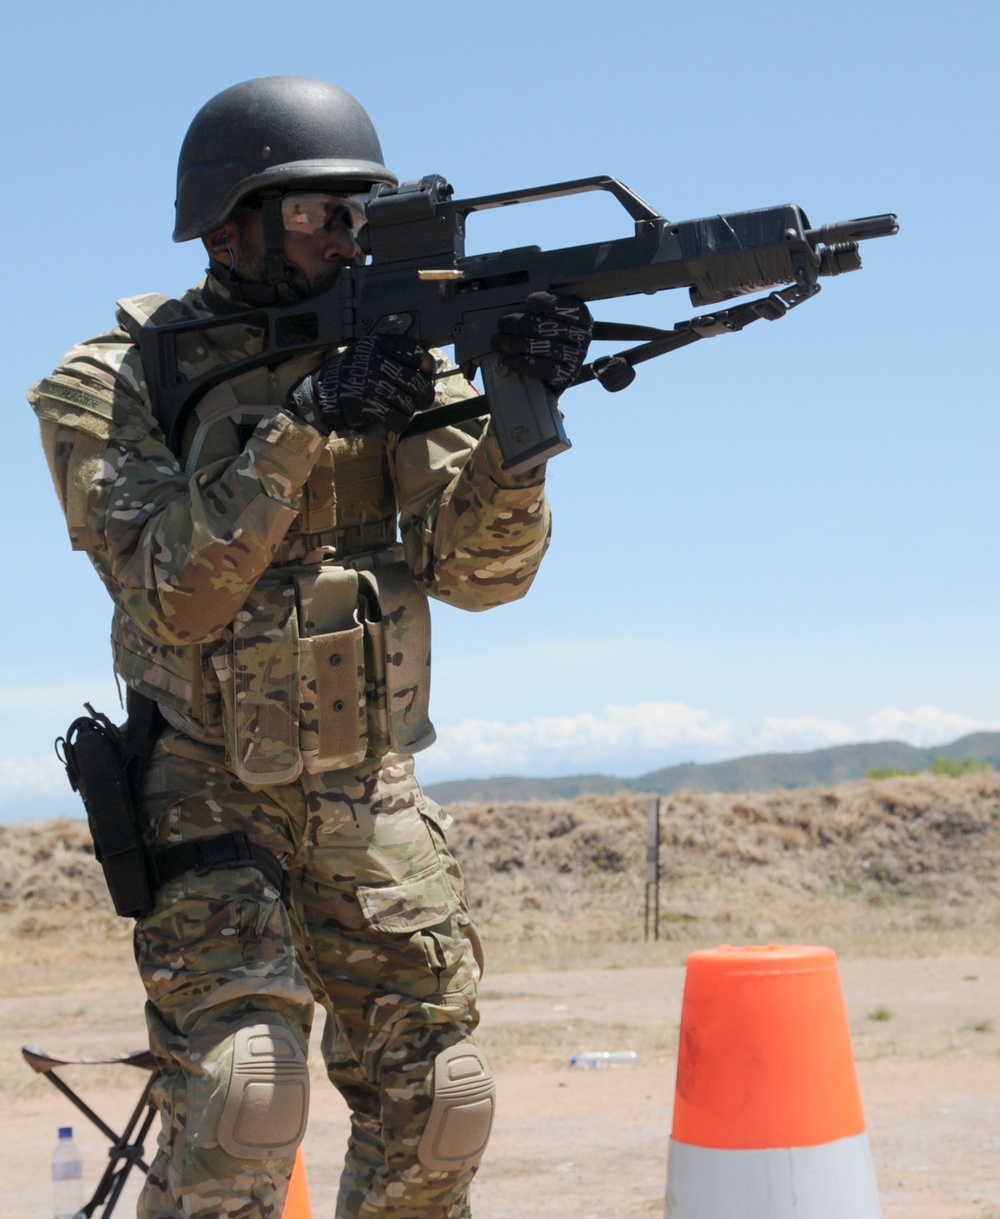 Critical tasks events takes speed, precision during Fuerzas Comando 2014